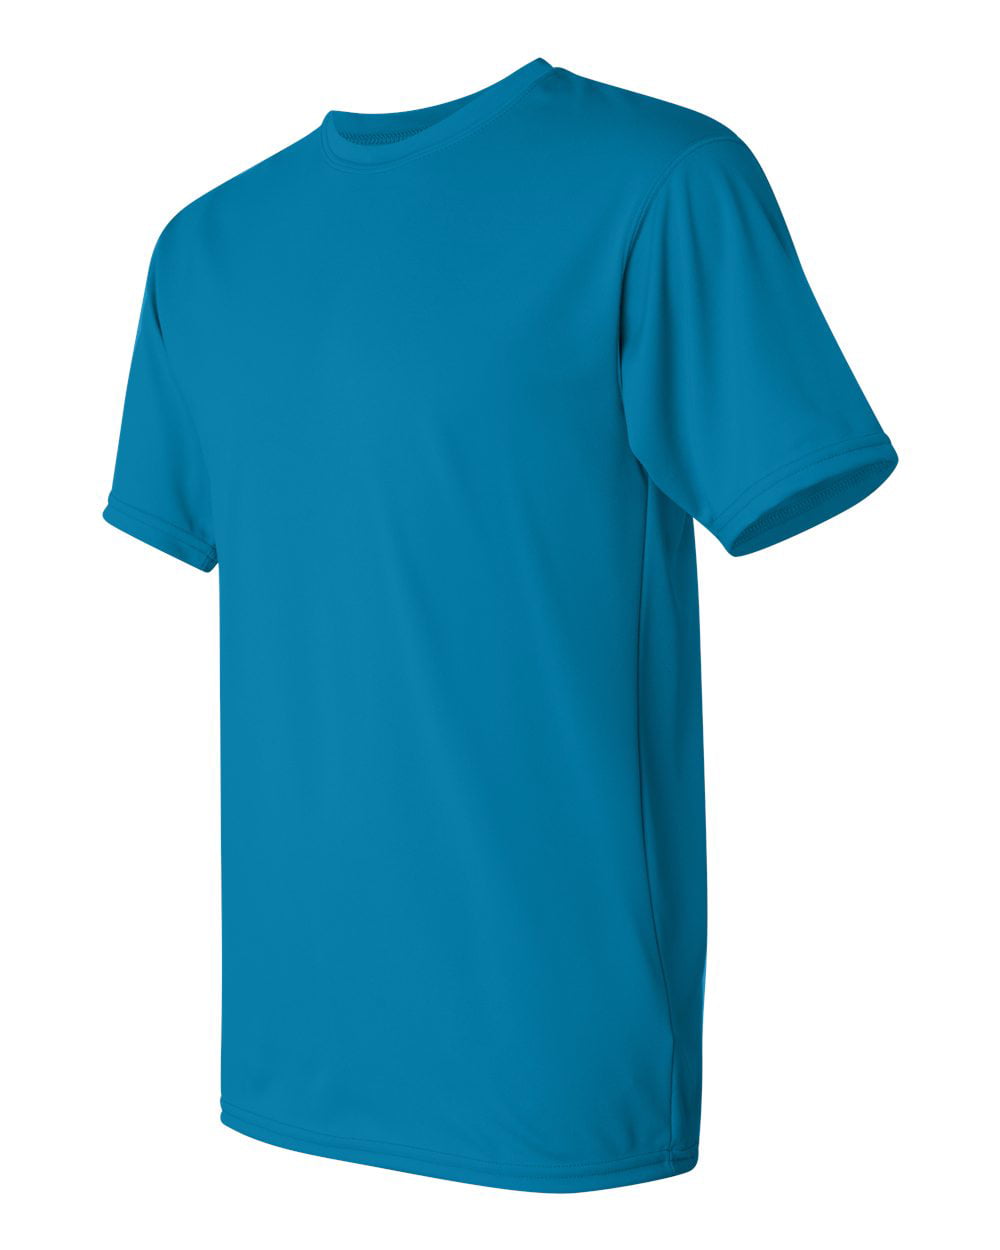 Augusta Sportswear - Nexgen Wicking T-Shirt - 790 - Teal - Size: 2XL